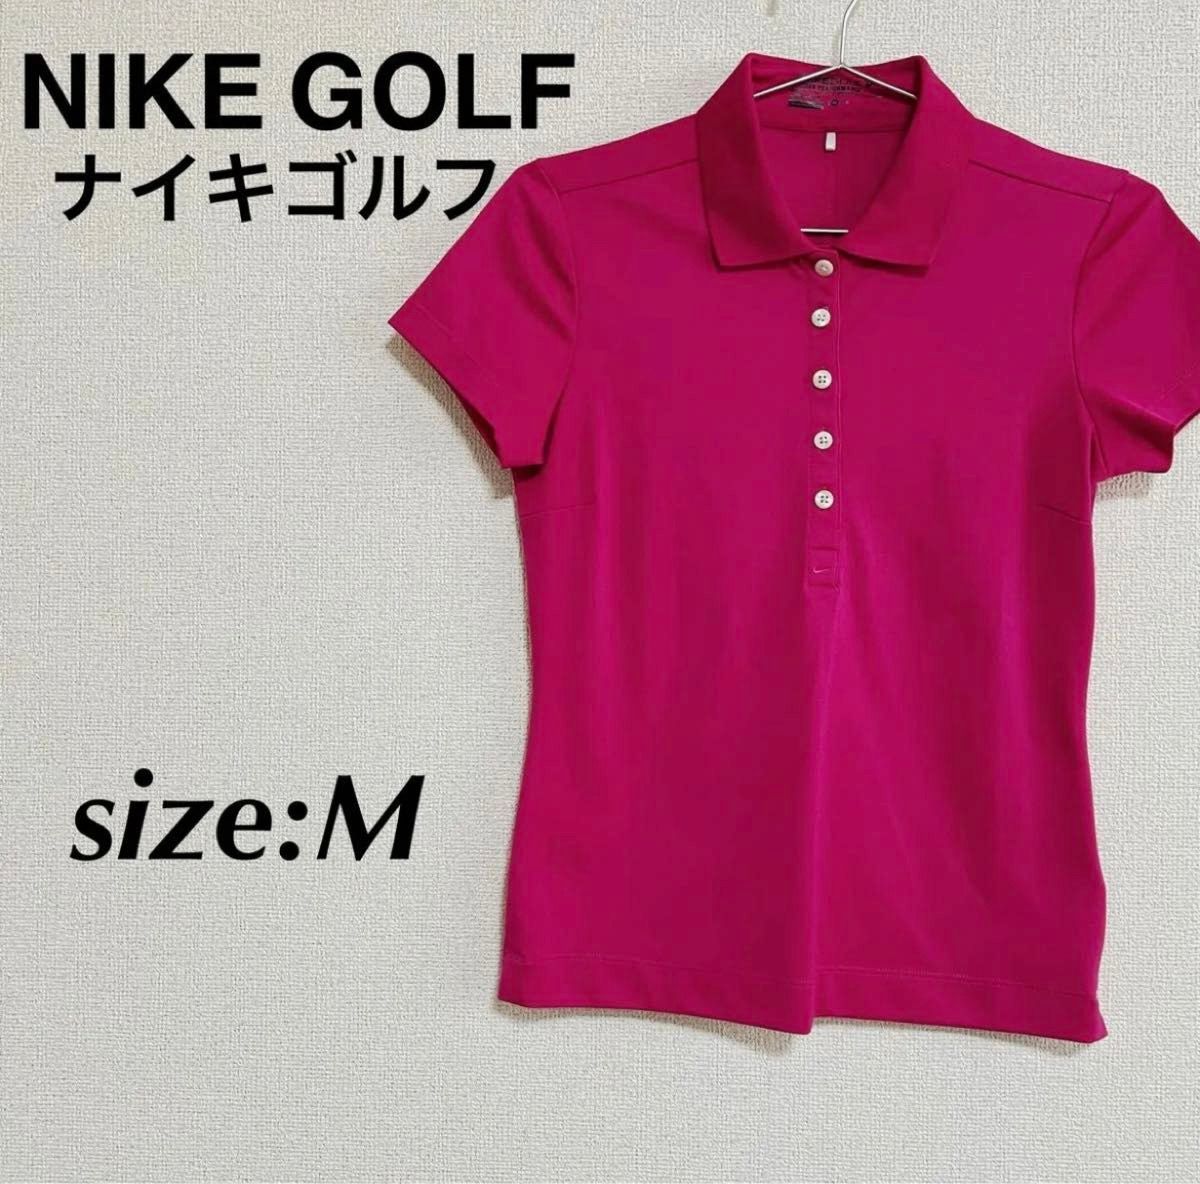 NIKE GOLF ナイキゴルフ DRI-FIT 半袖 ポロシャツ ゴルフウェア